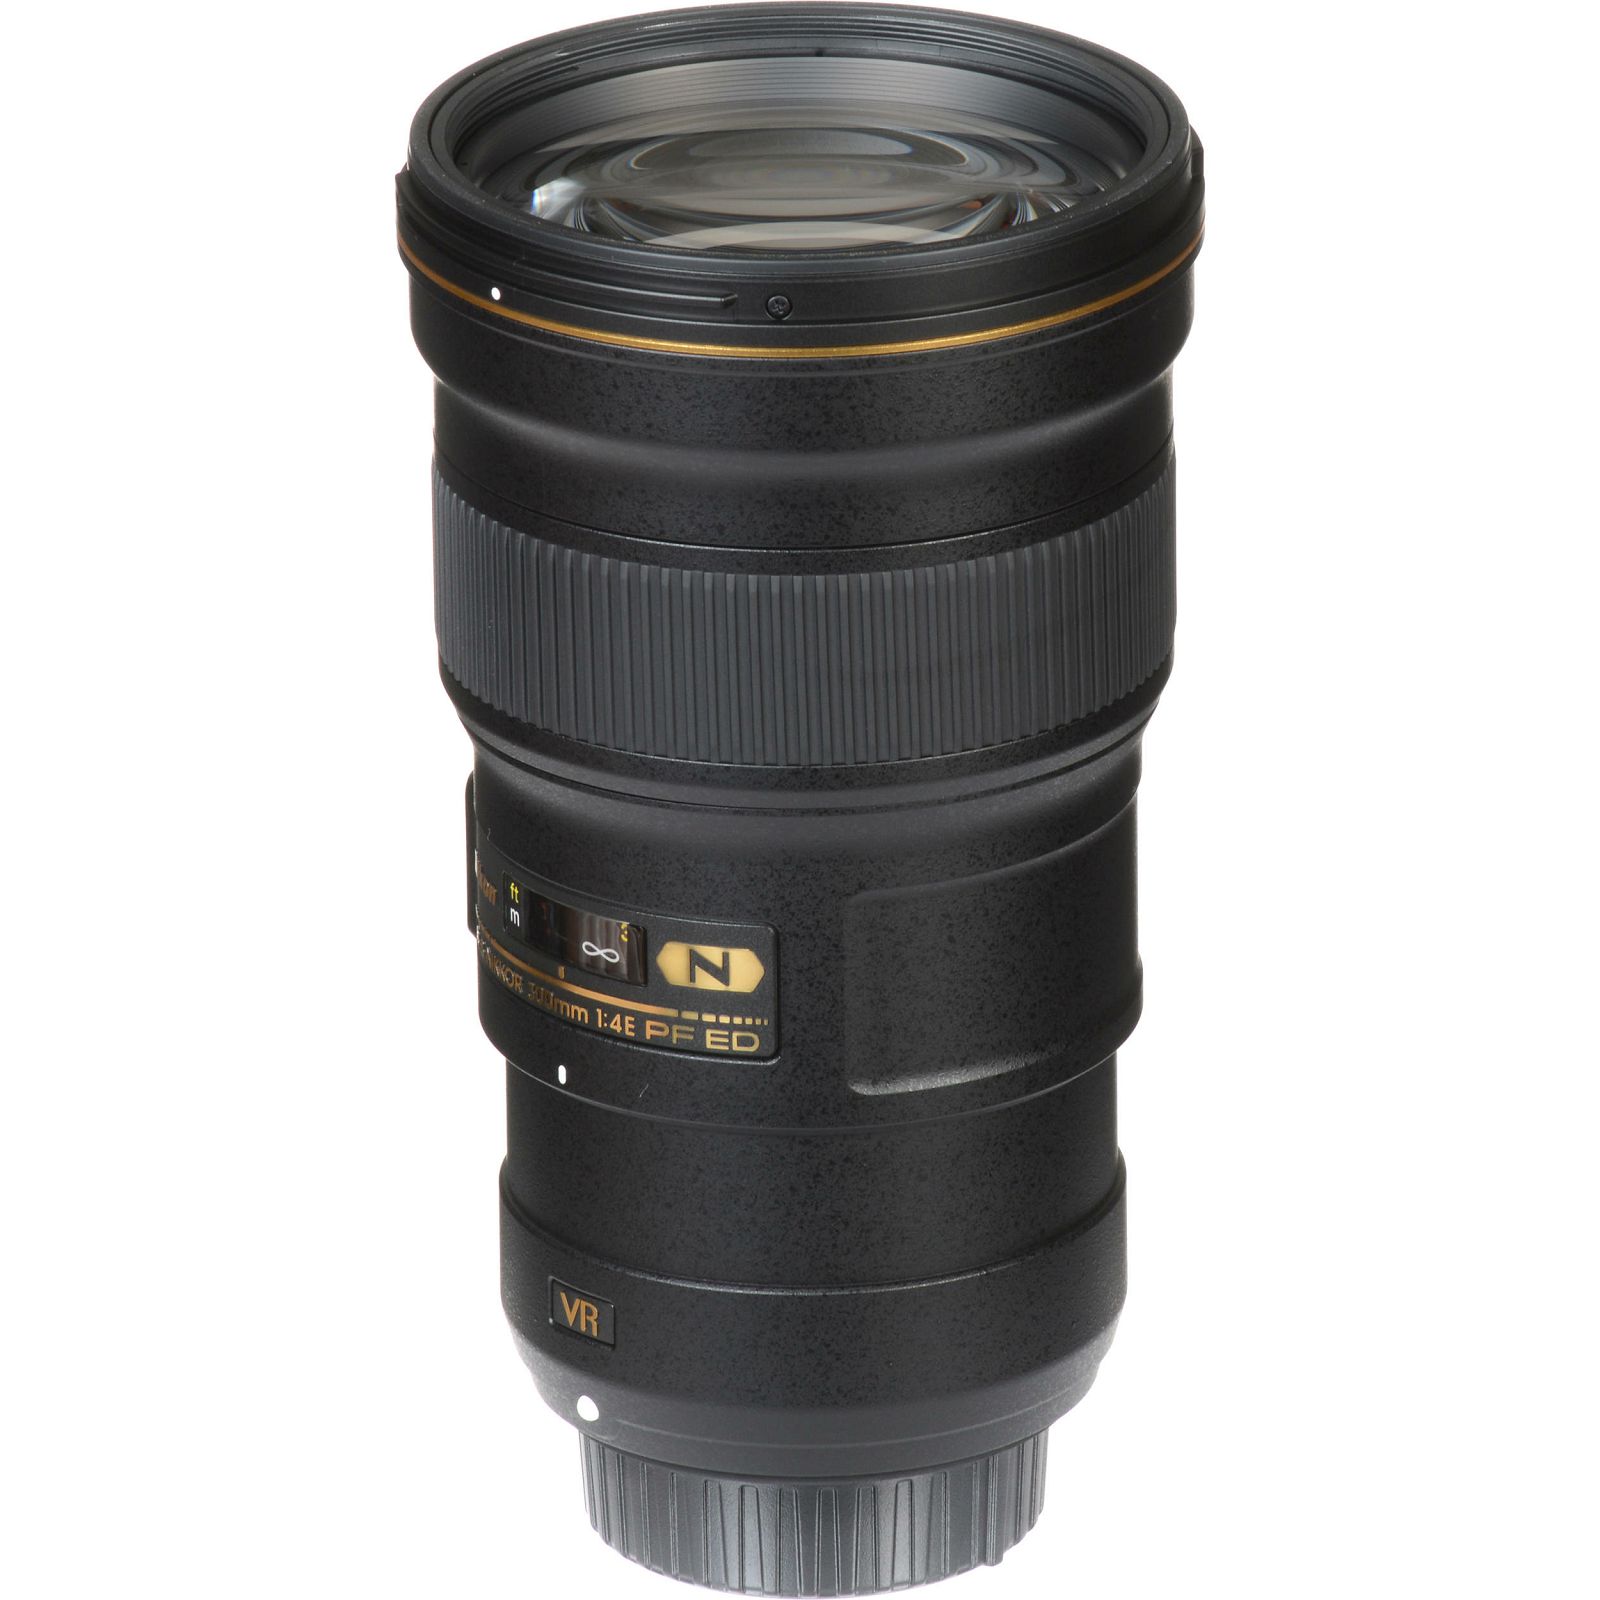 Nikon AF-S 300mm f/4E PF ED VR telefoto objektiv Nikkor 300 F4 E f/4 F4E auto focus prime lens (JAA342DA)